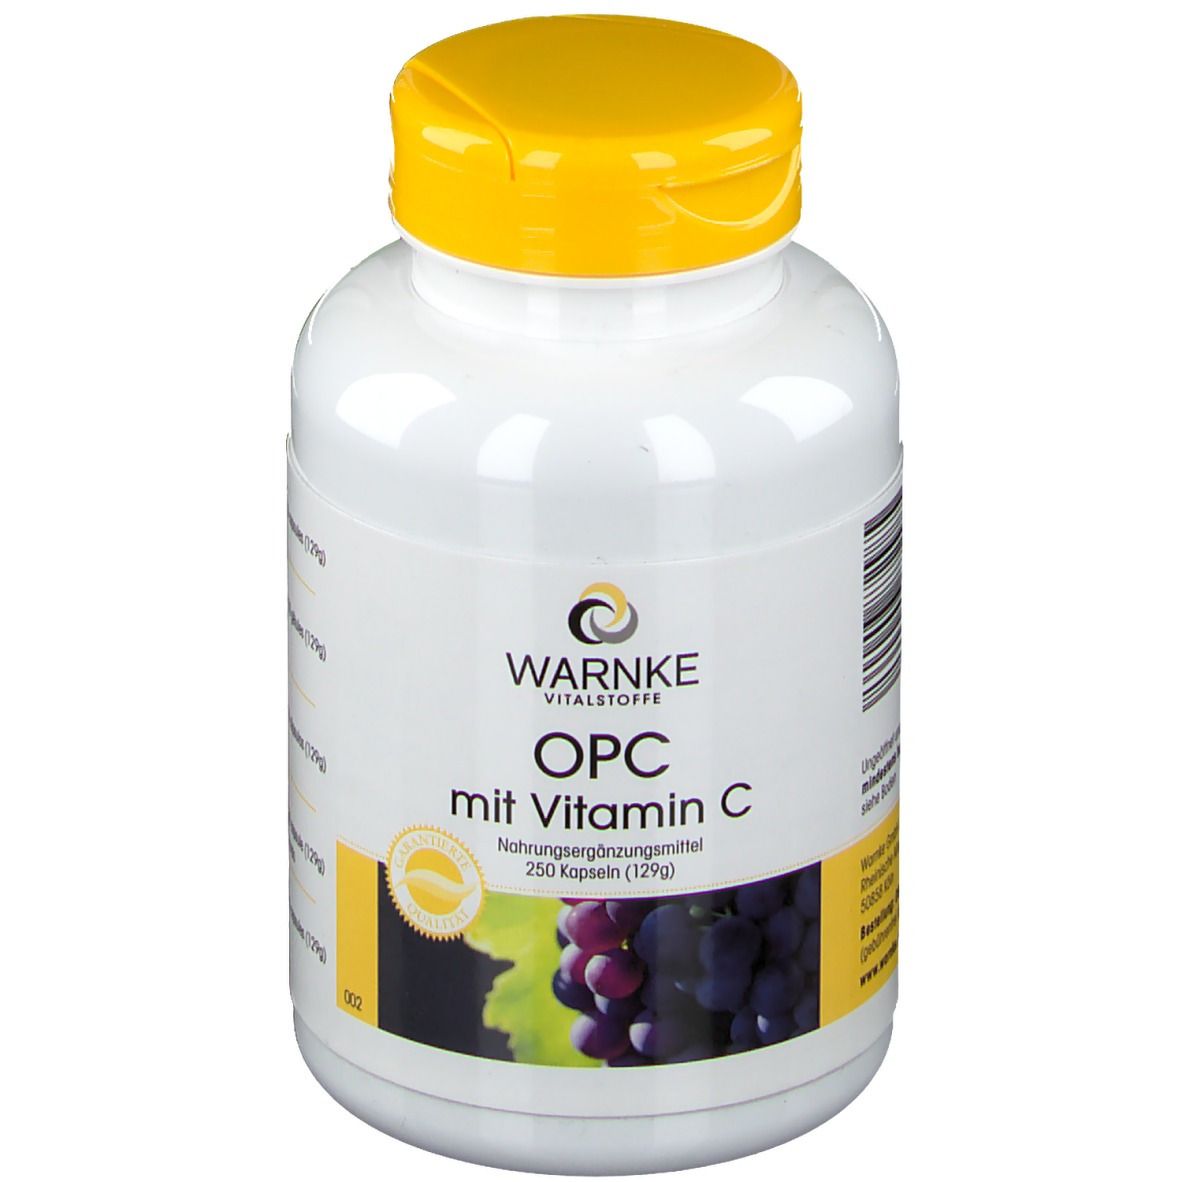 Image of OPC mit Vitamin C